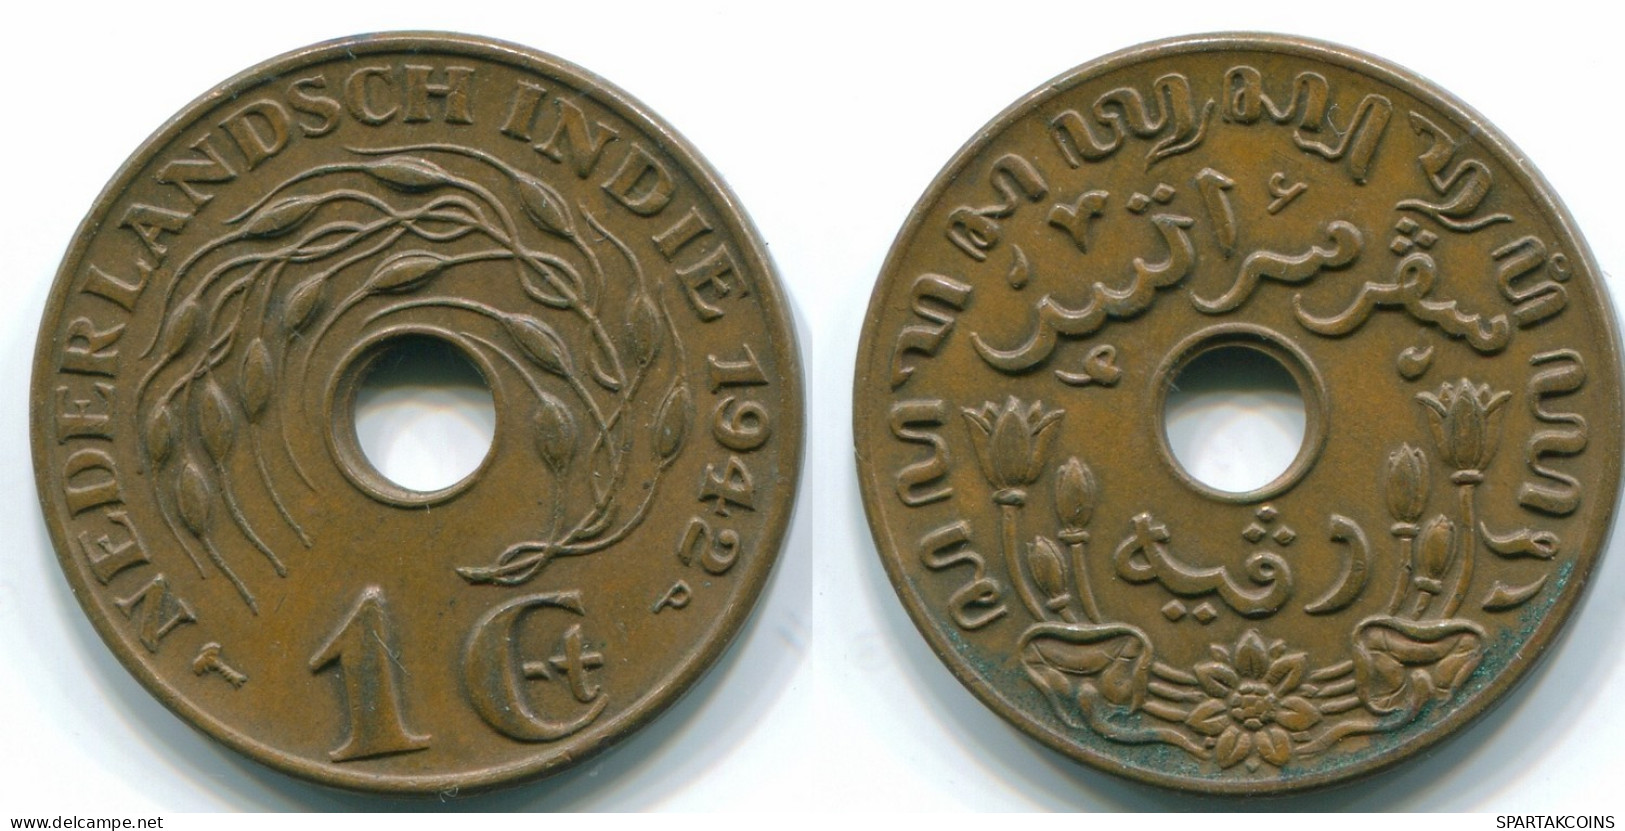 1 CENT 1942 INDIAS ORIENTALES DE LOS PAÍSES BAJOS INDONESIA Bronze #S10305.E.A - Dutch East Indies